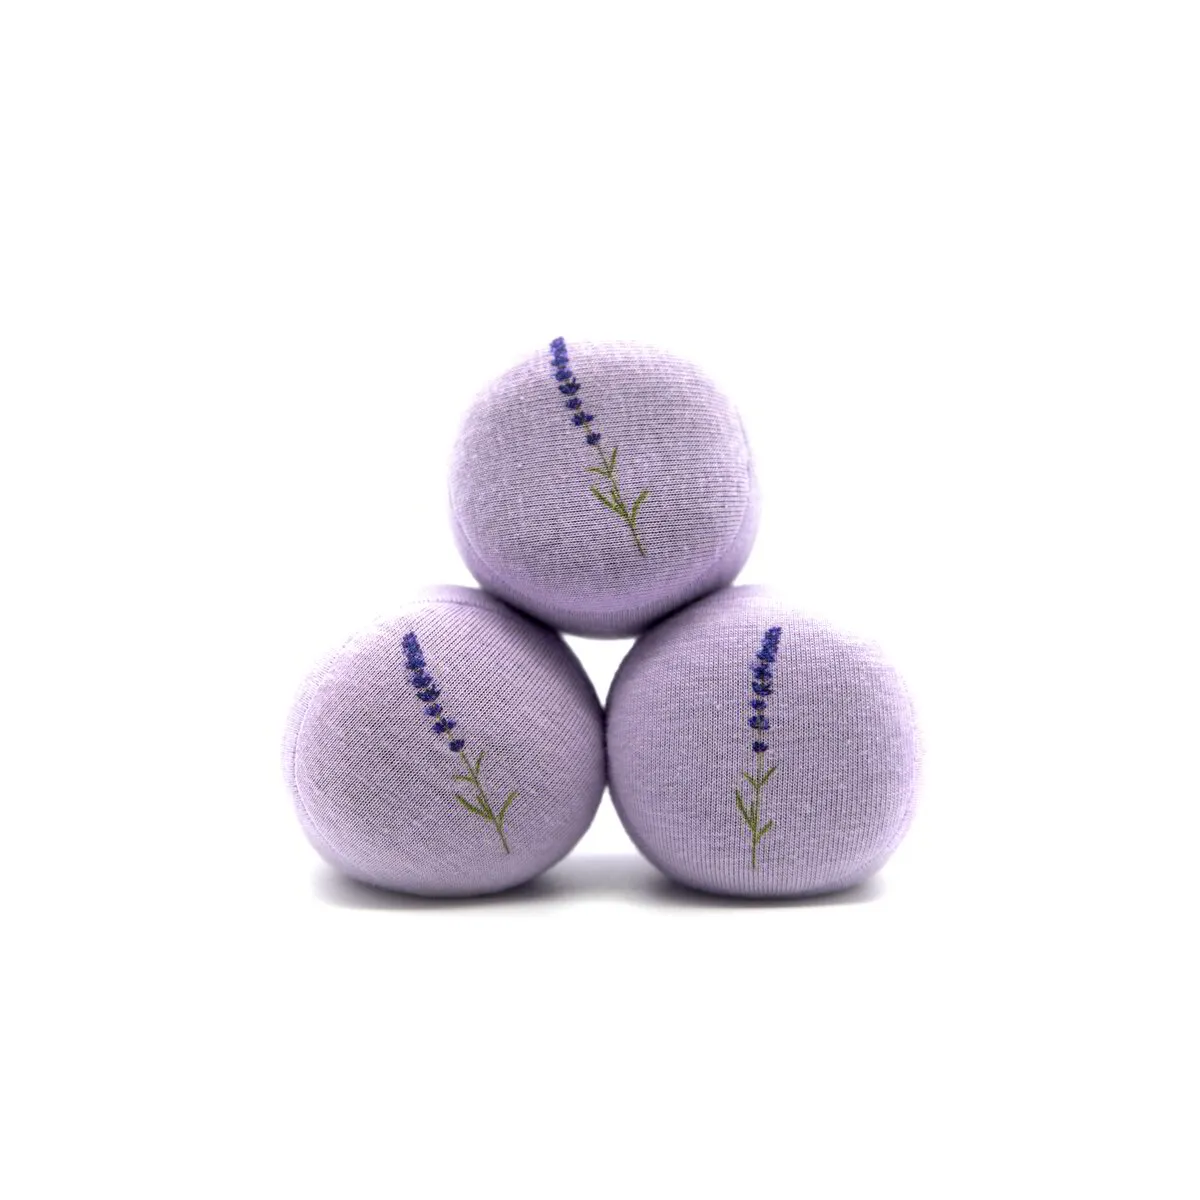 Lavender Stress Ball